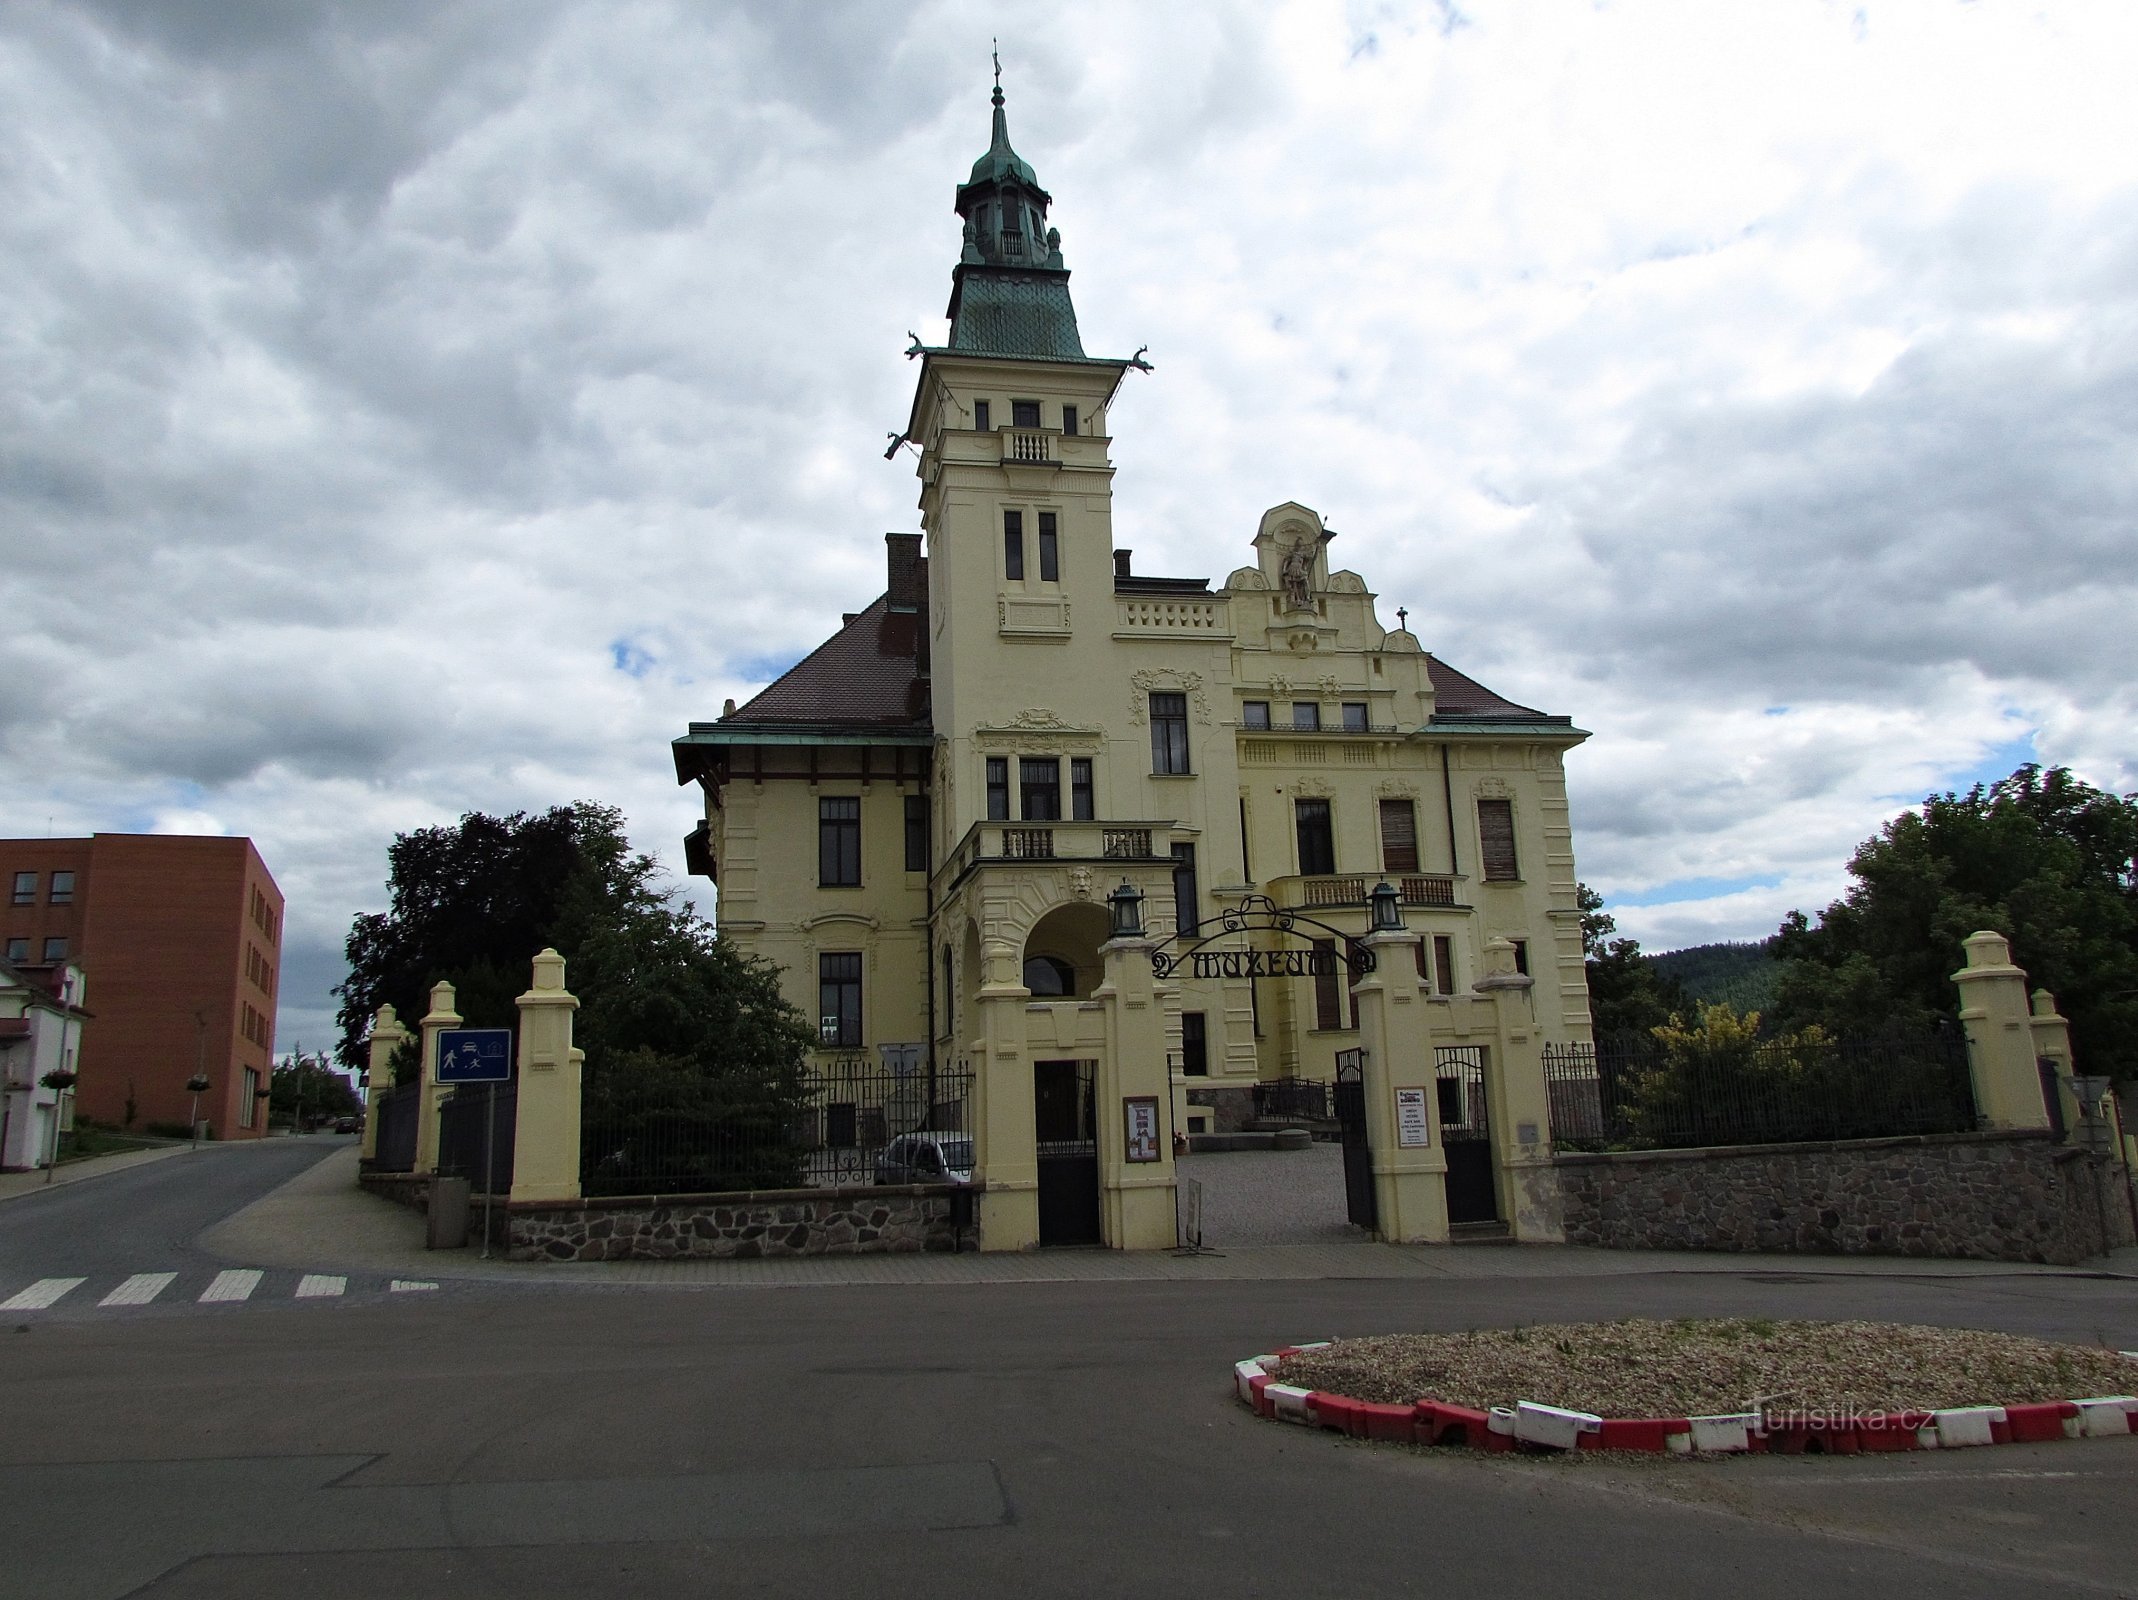 Ústí nad Orlicí - the villa of the biggest businessman